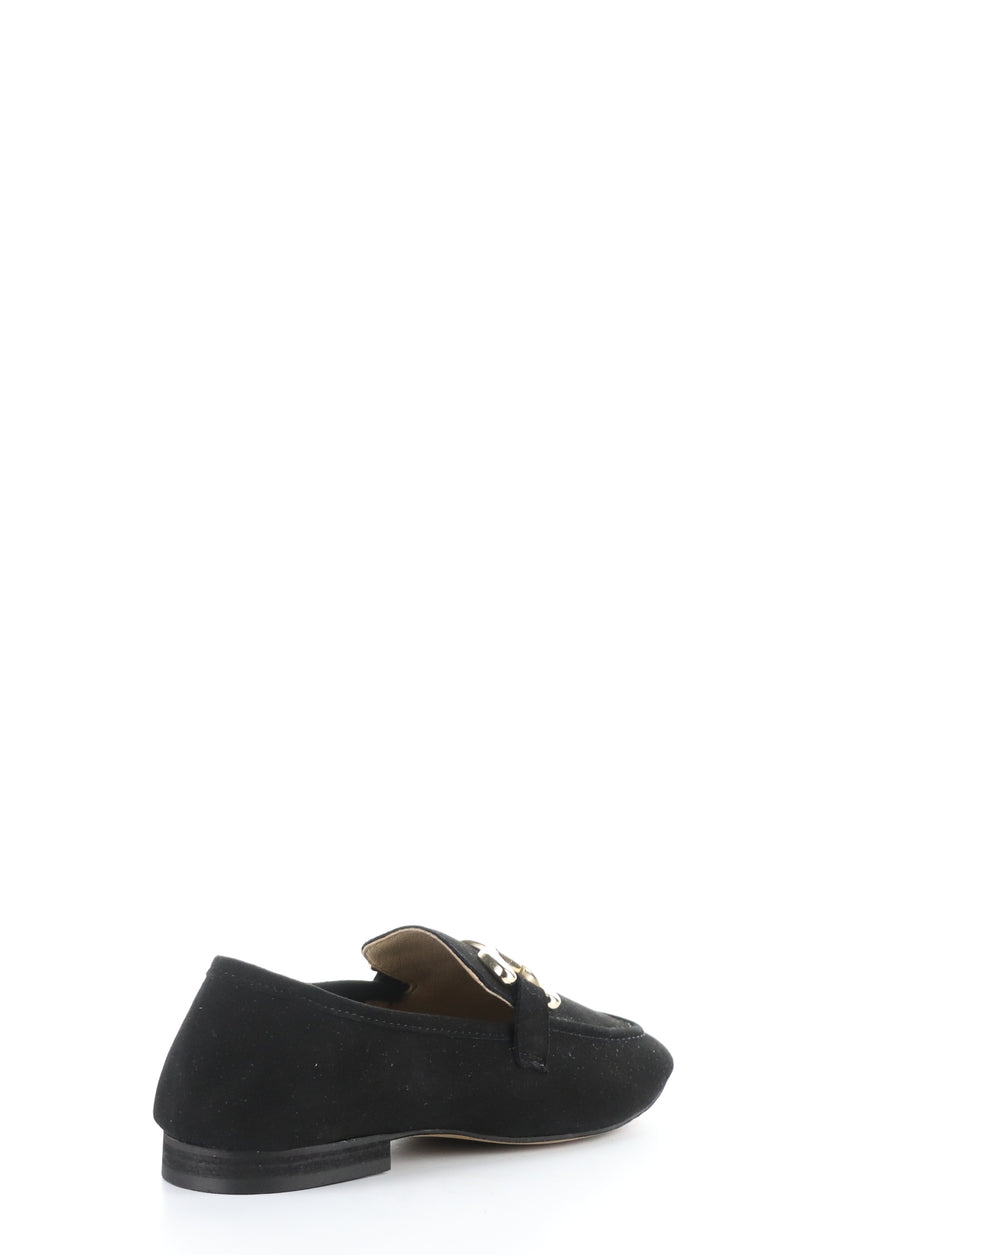 MACIE BLACK Slip-on Shoes